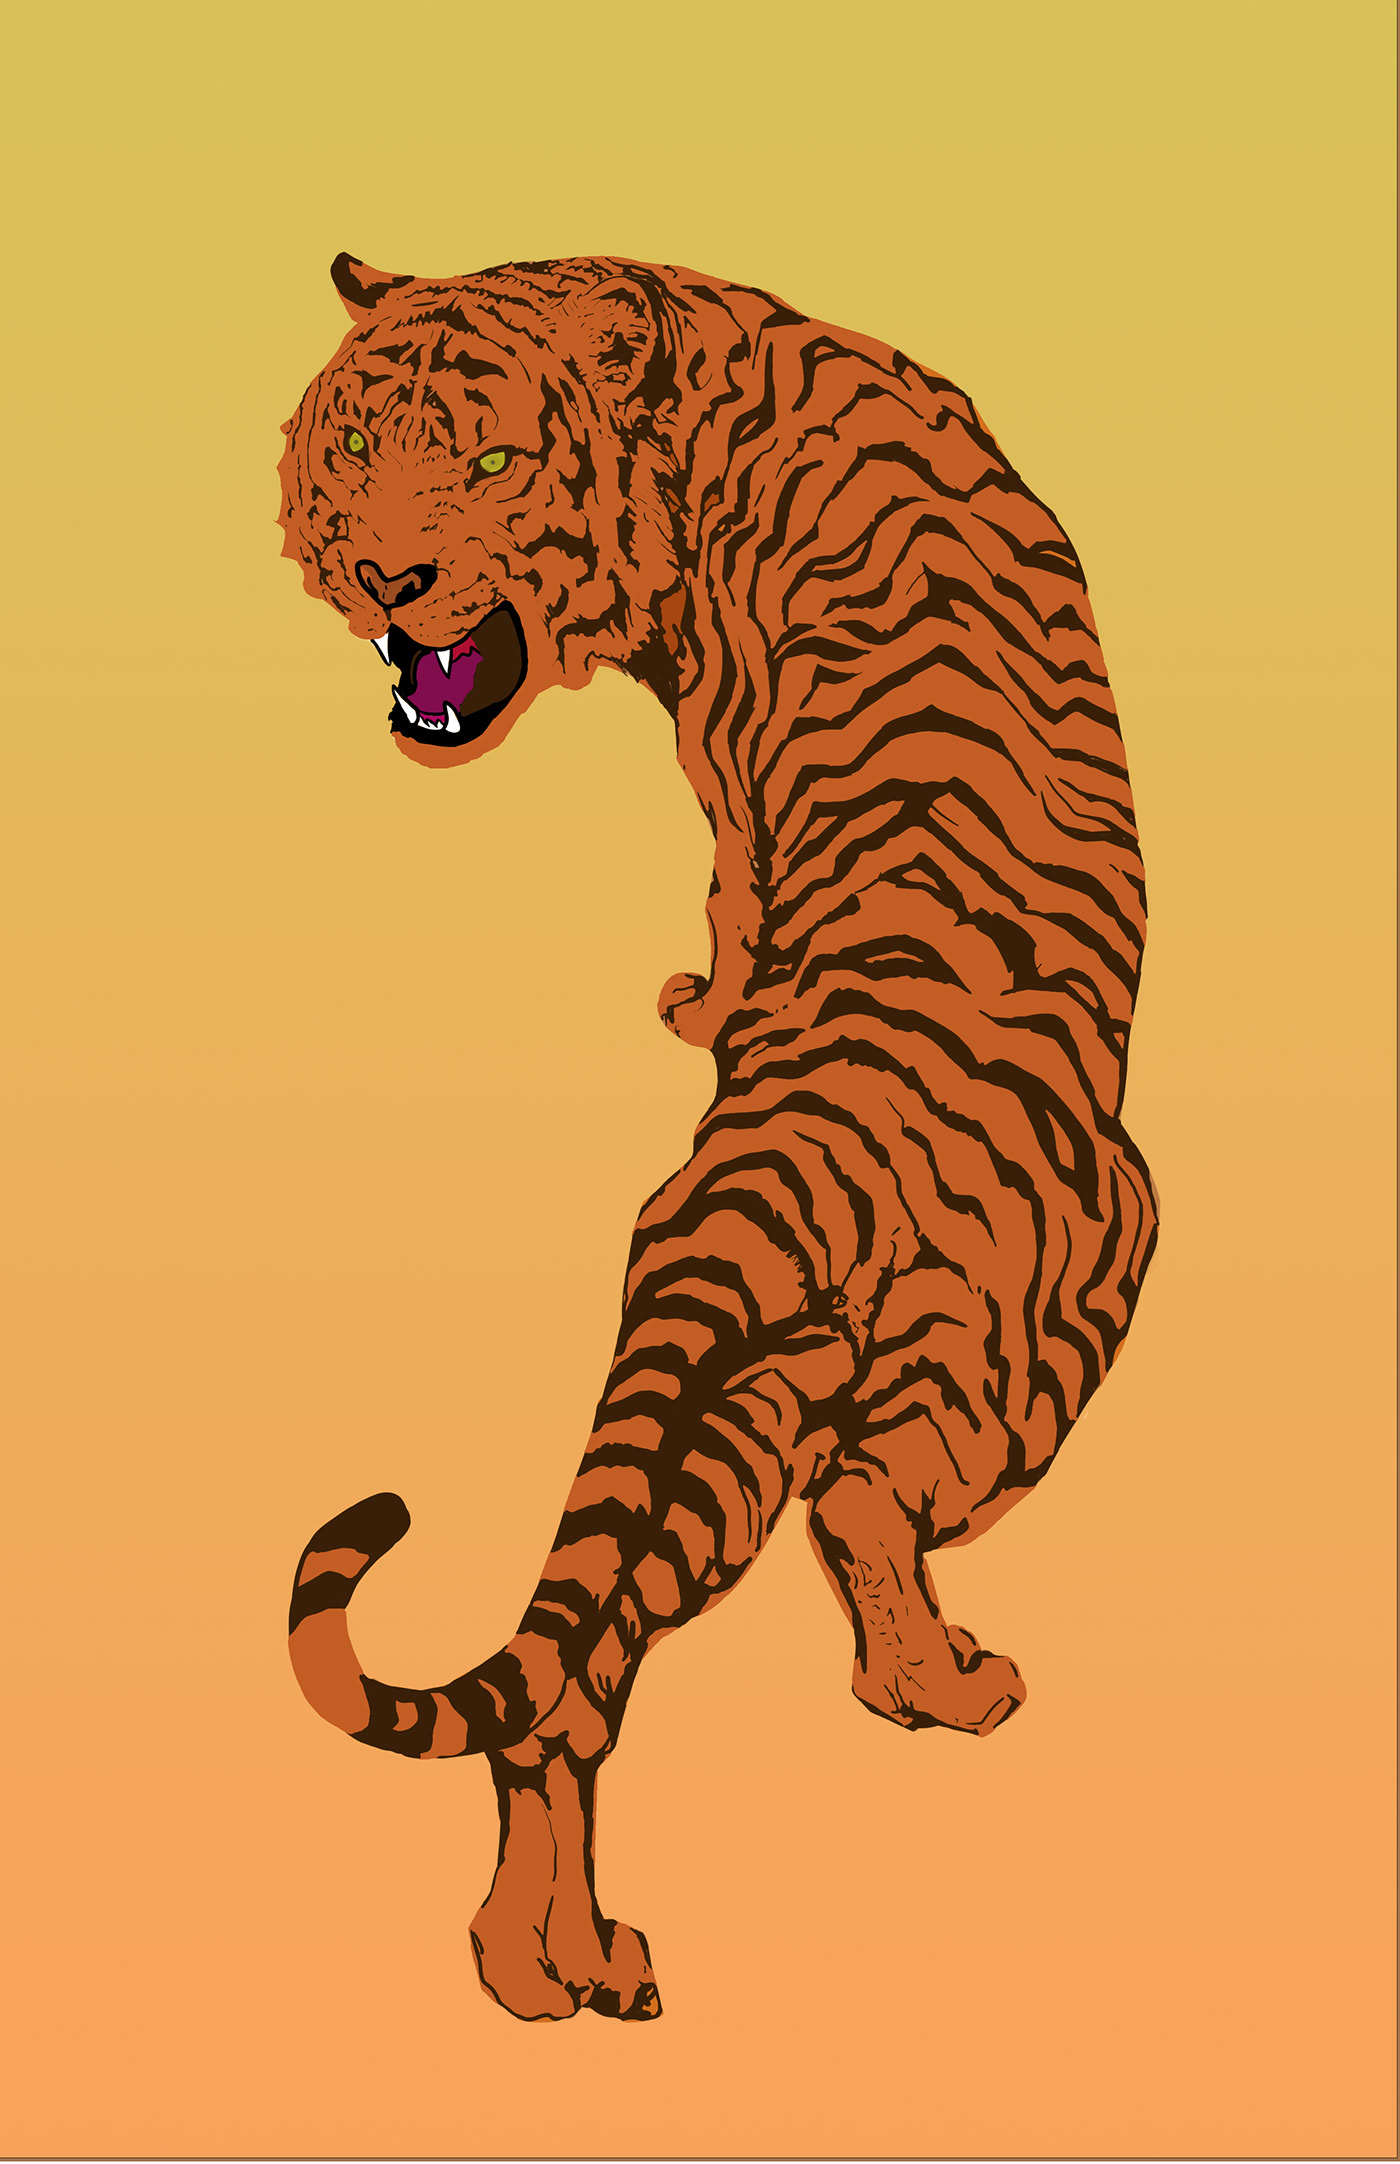 Image may contain: animal, carnivore and tiger